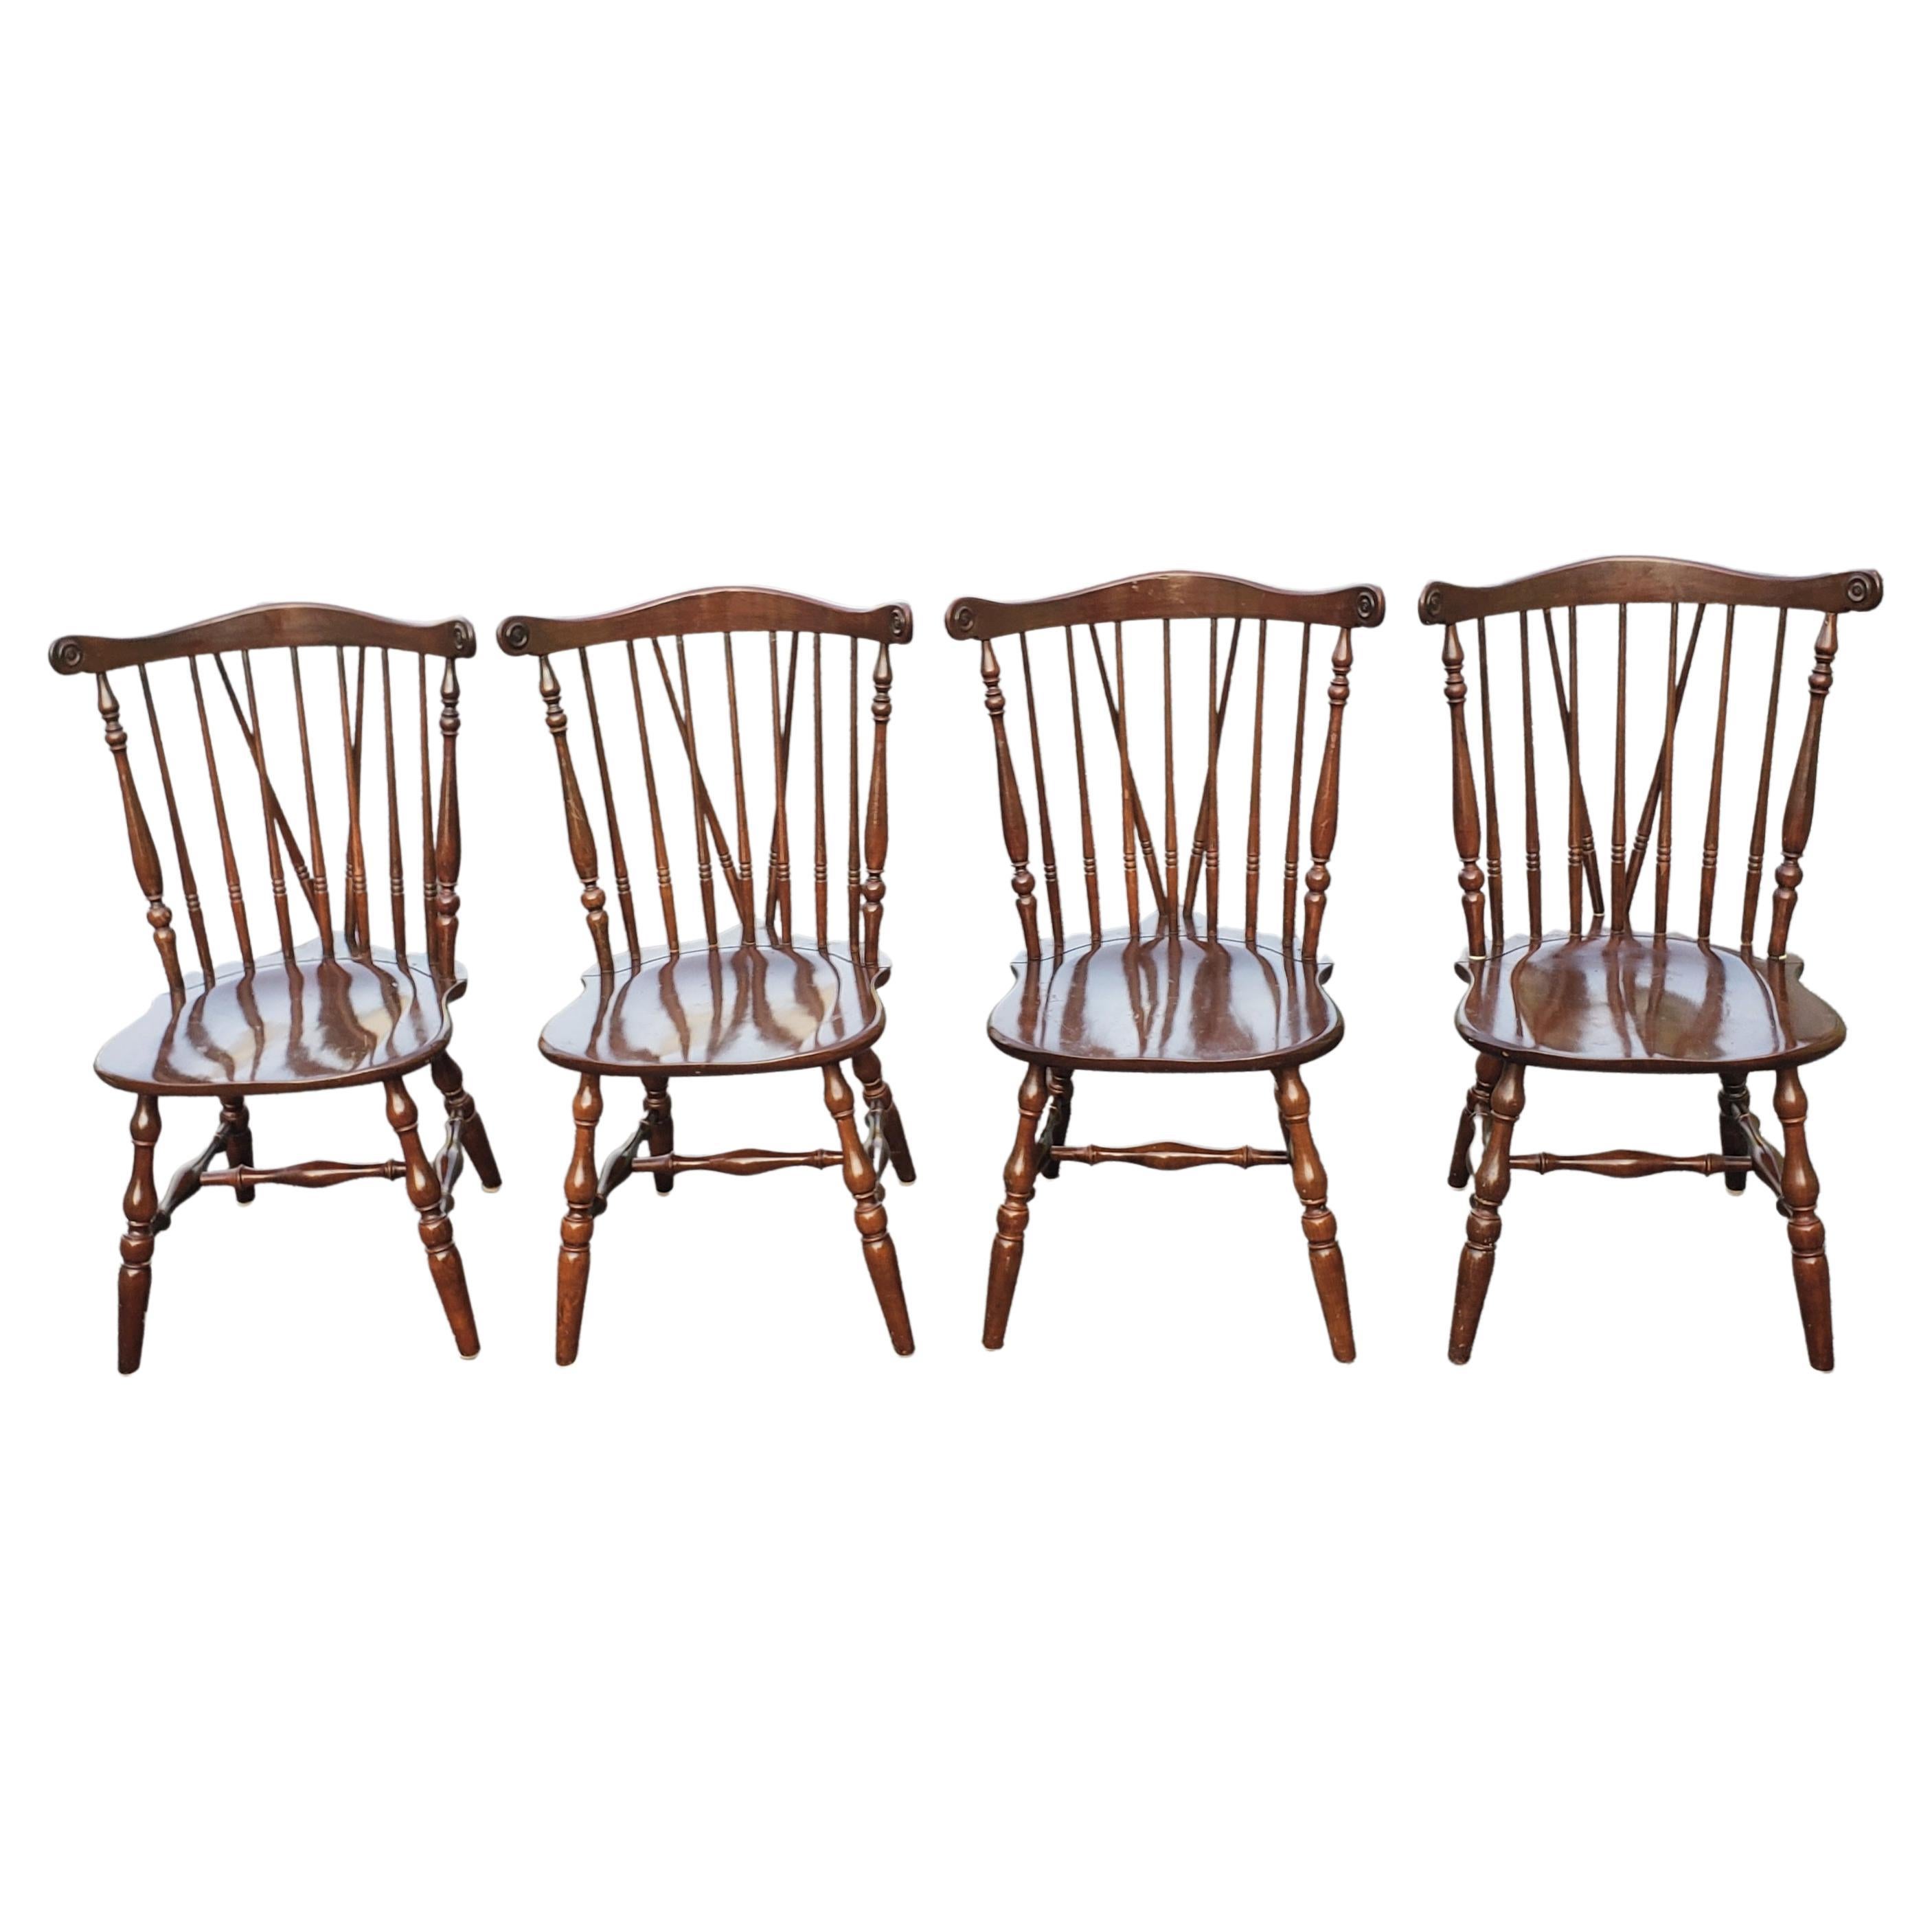 Beautiful set of 4 Kling Furniture Solid Cherry Fiddleback brace back windsor chairs, C. 1940s. 
Measure 22